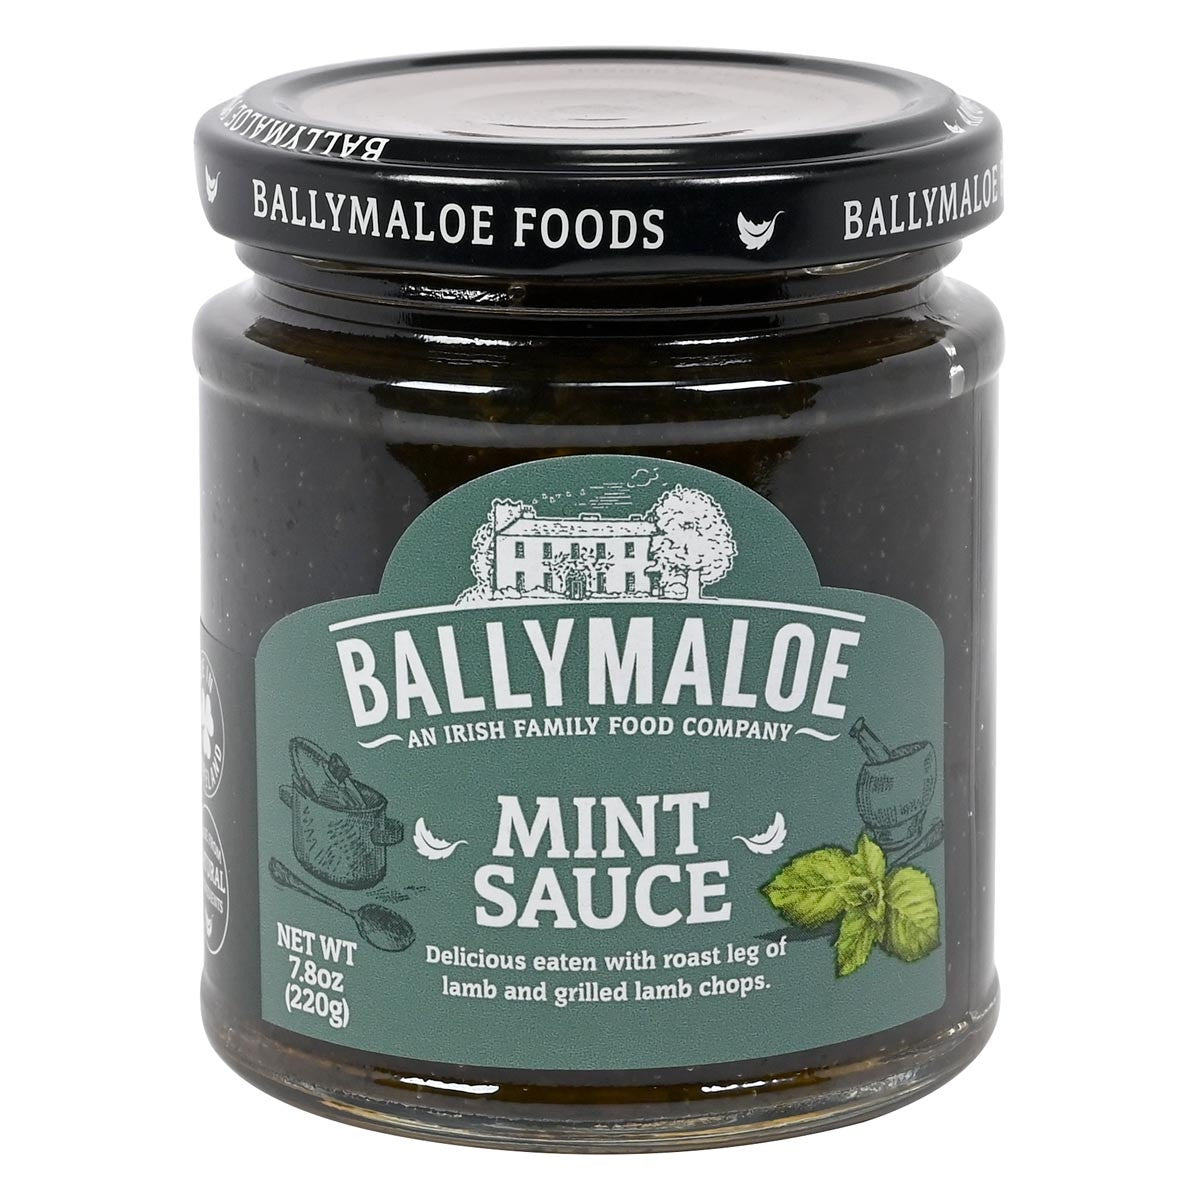 Ballymaloe Mint Sauce 7.8oz.